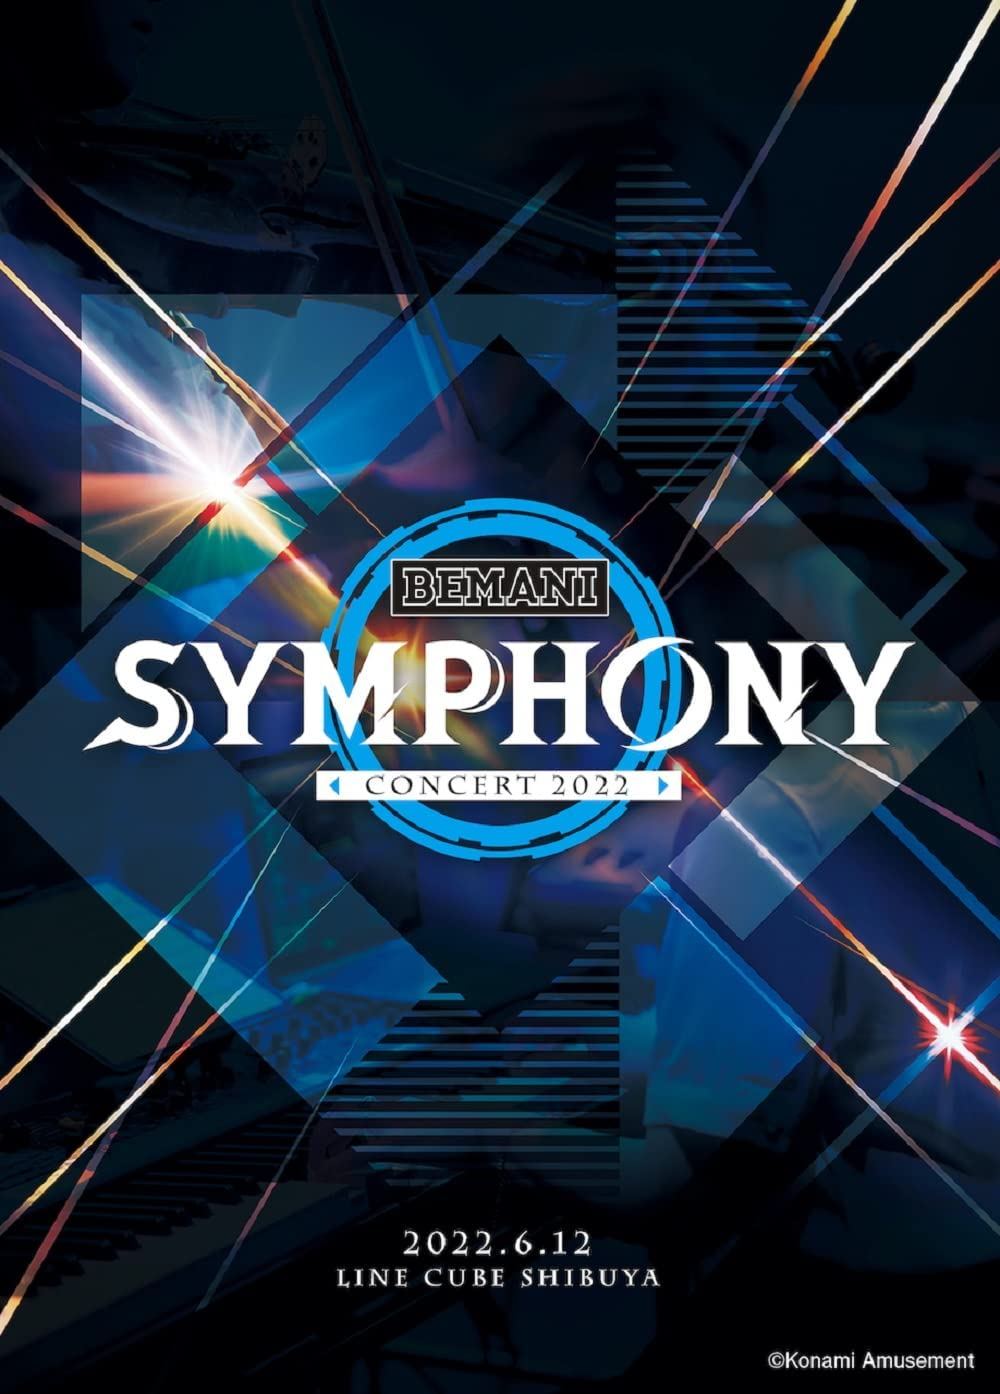 Bemani Symphony Concert 2022